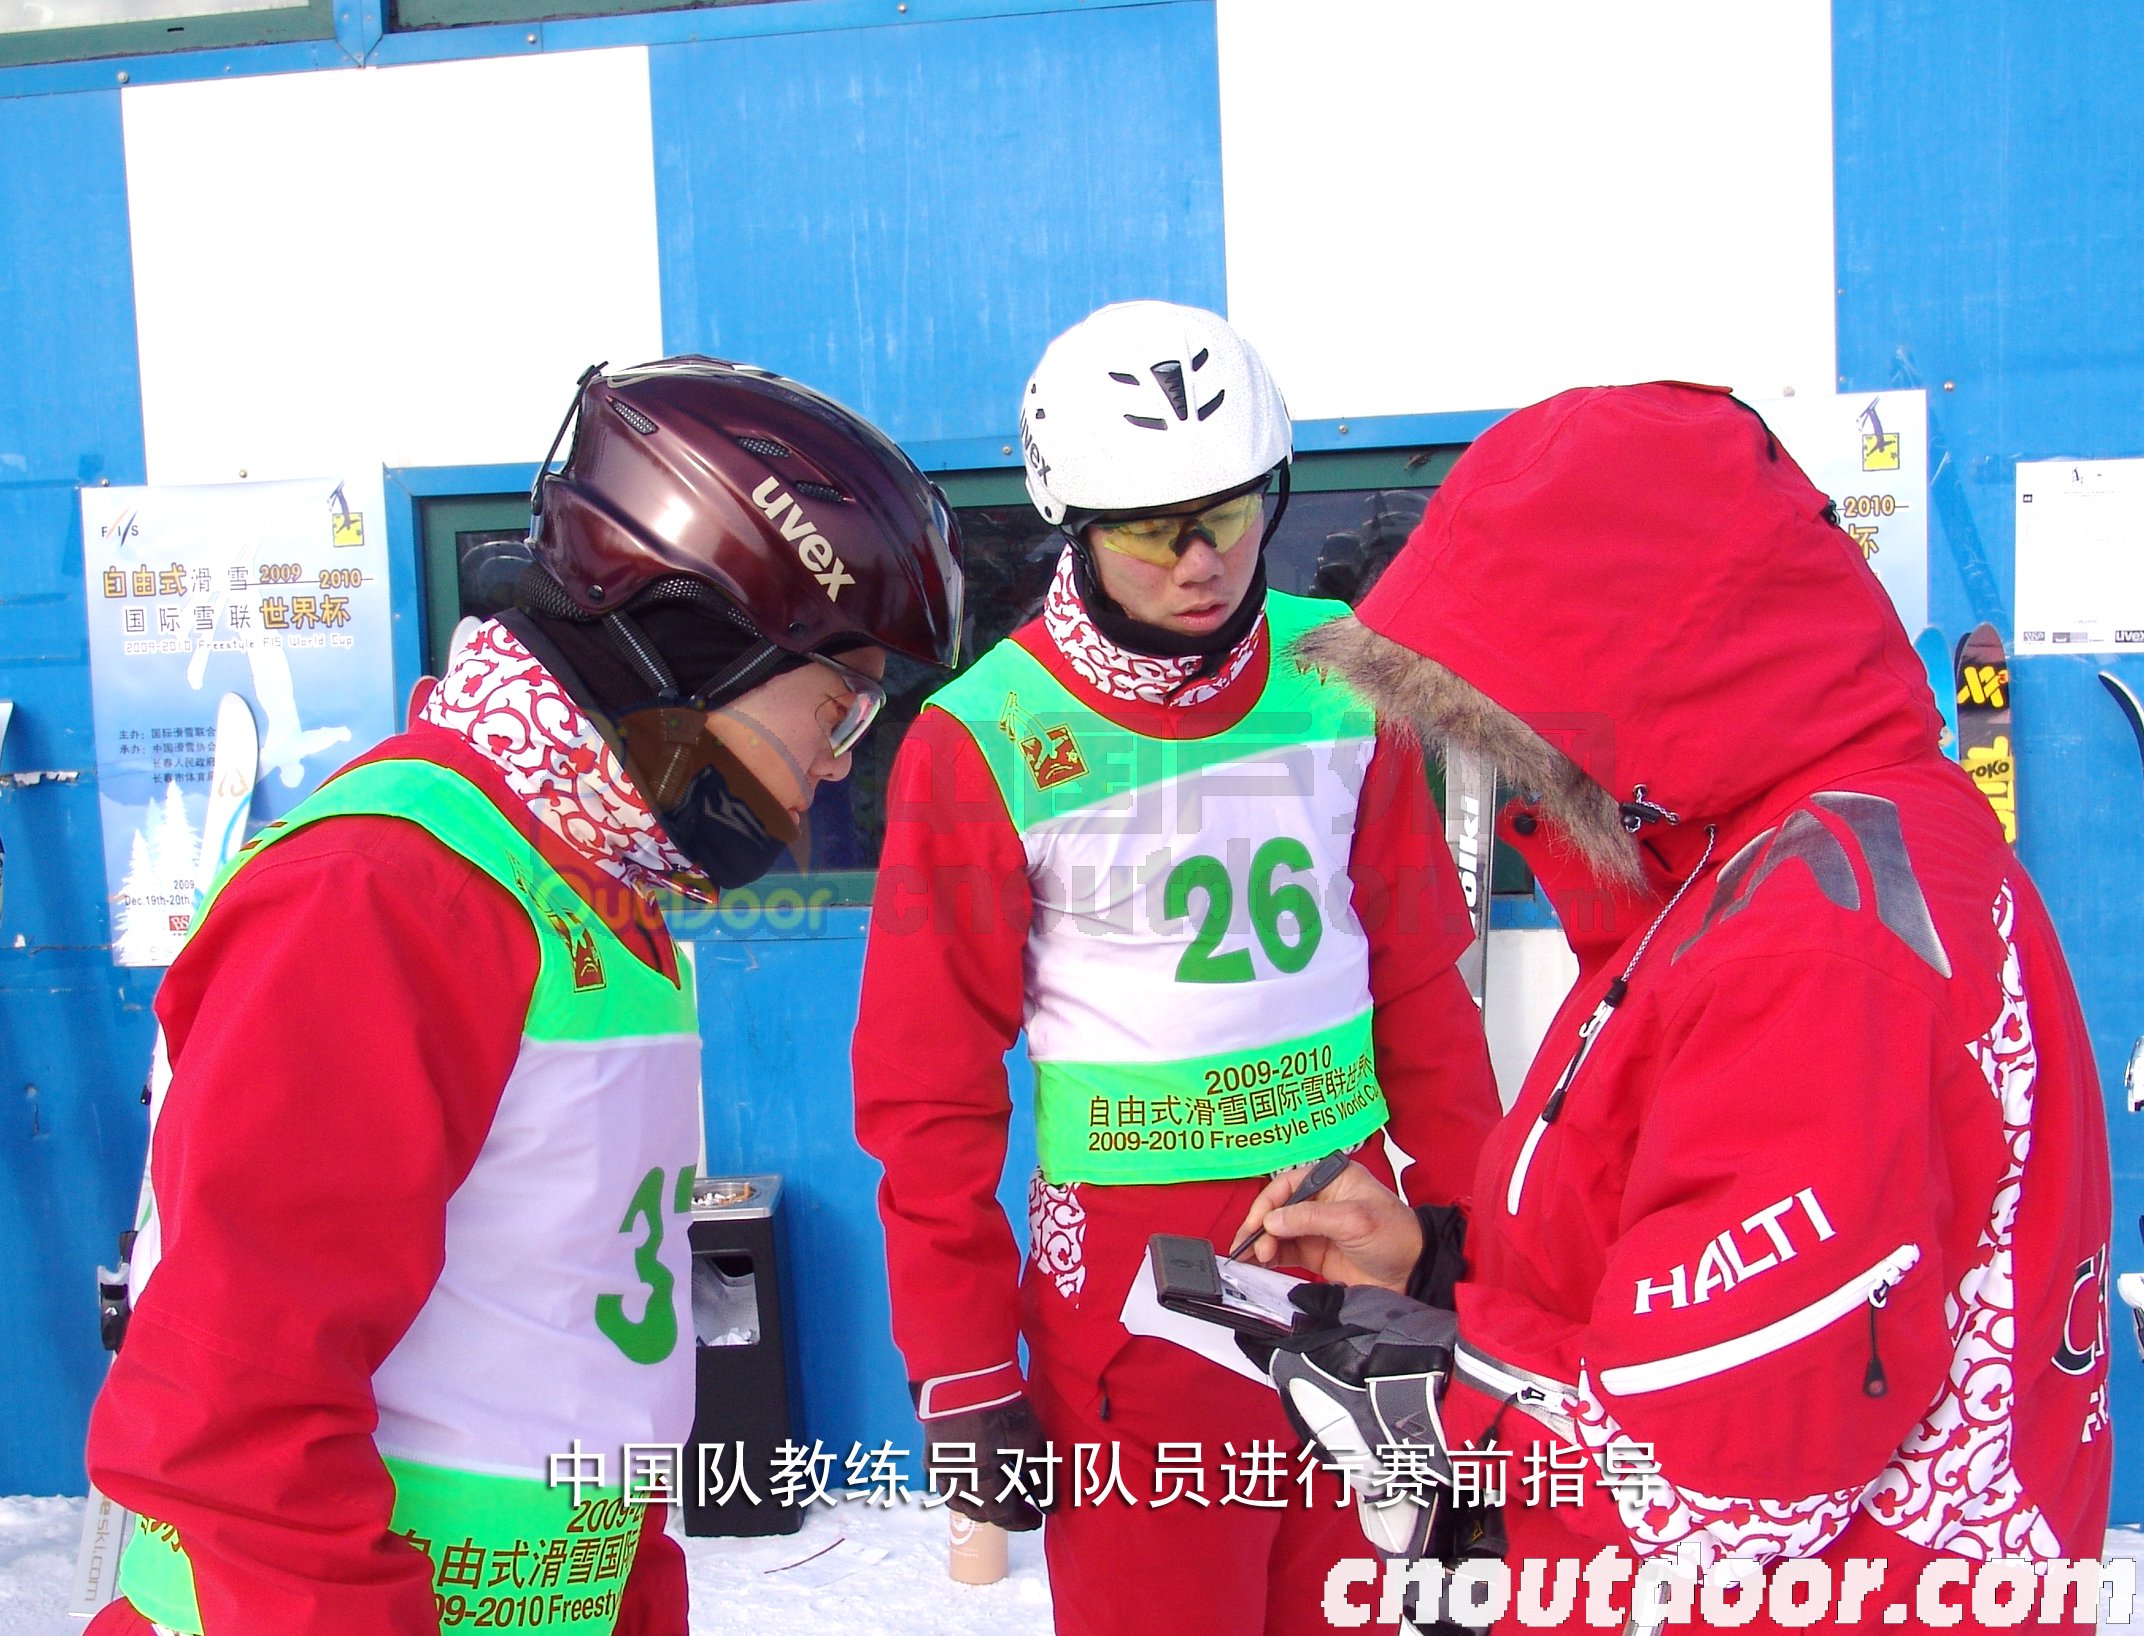 HALTI品牌与中国自由式滑雪队建立合作关系